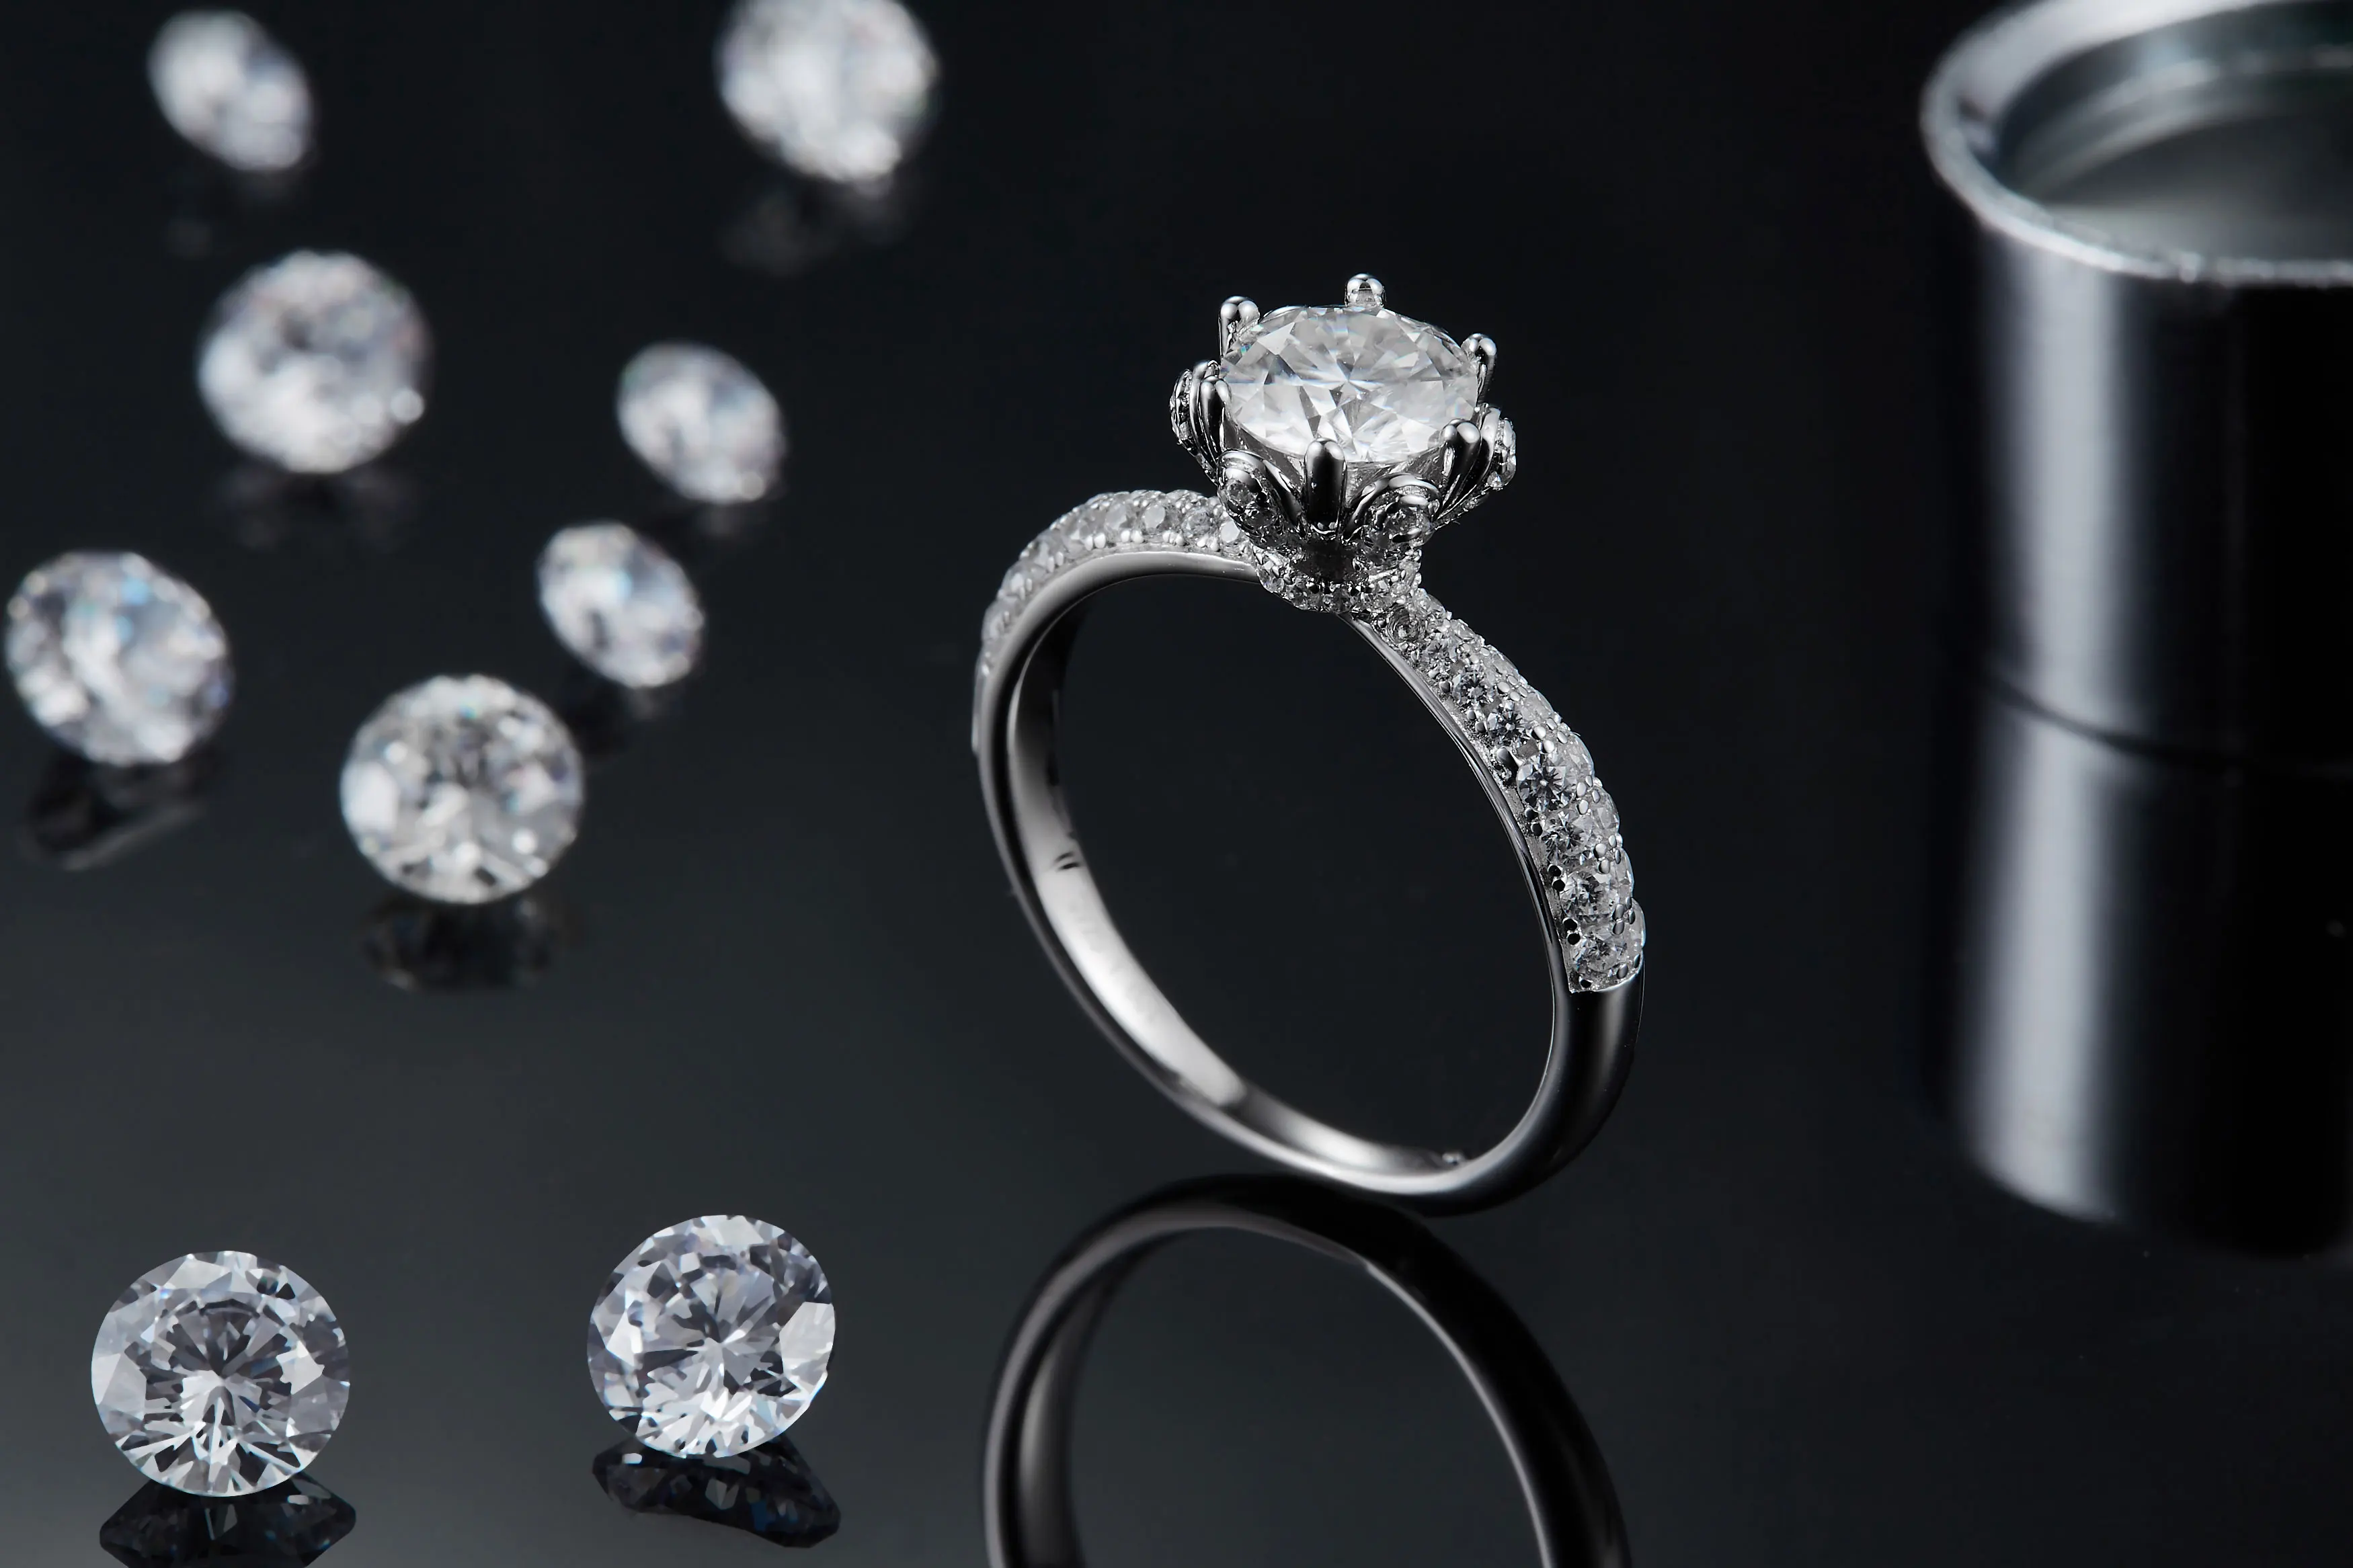 Shanzuan Jewelry Western Style S925 Round Shape 2ct VVS Moissanite Diamond Wedding Ring for Women